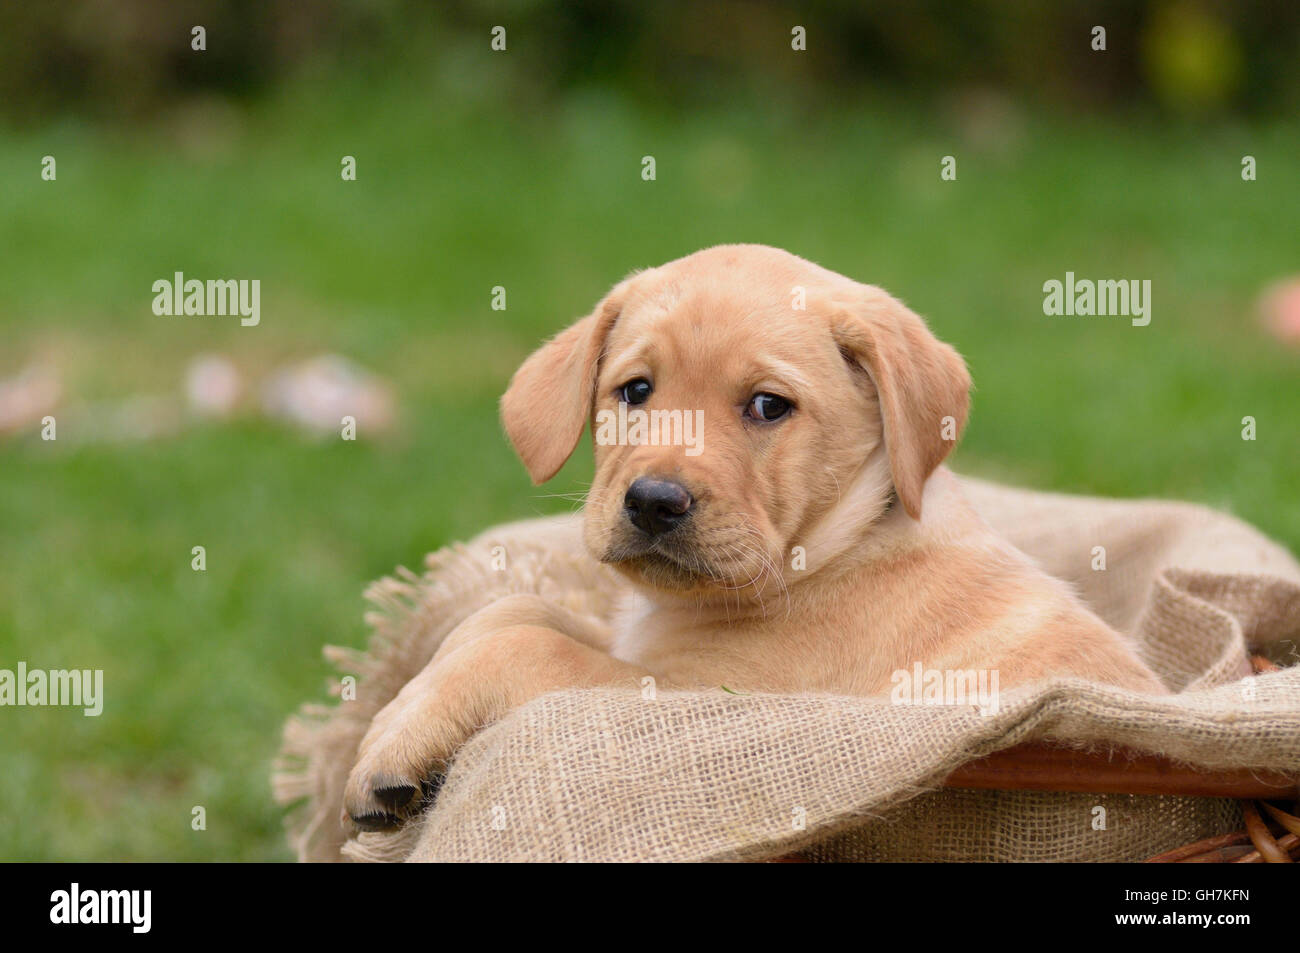 Yellow Labrador puppy sitting in dog basket Stock Photo